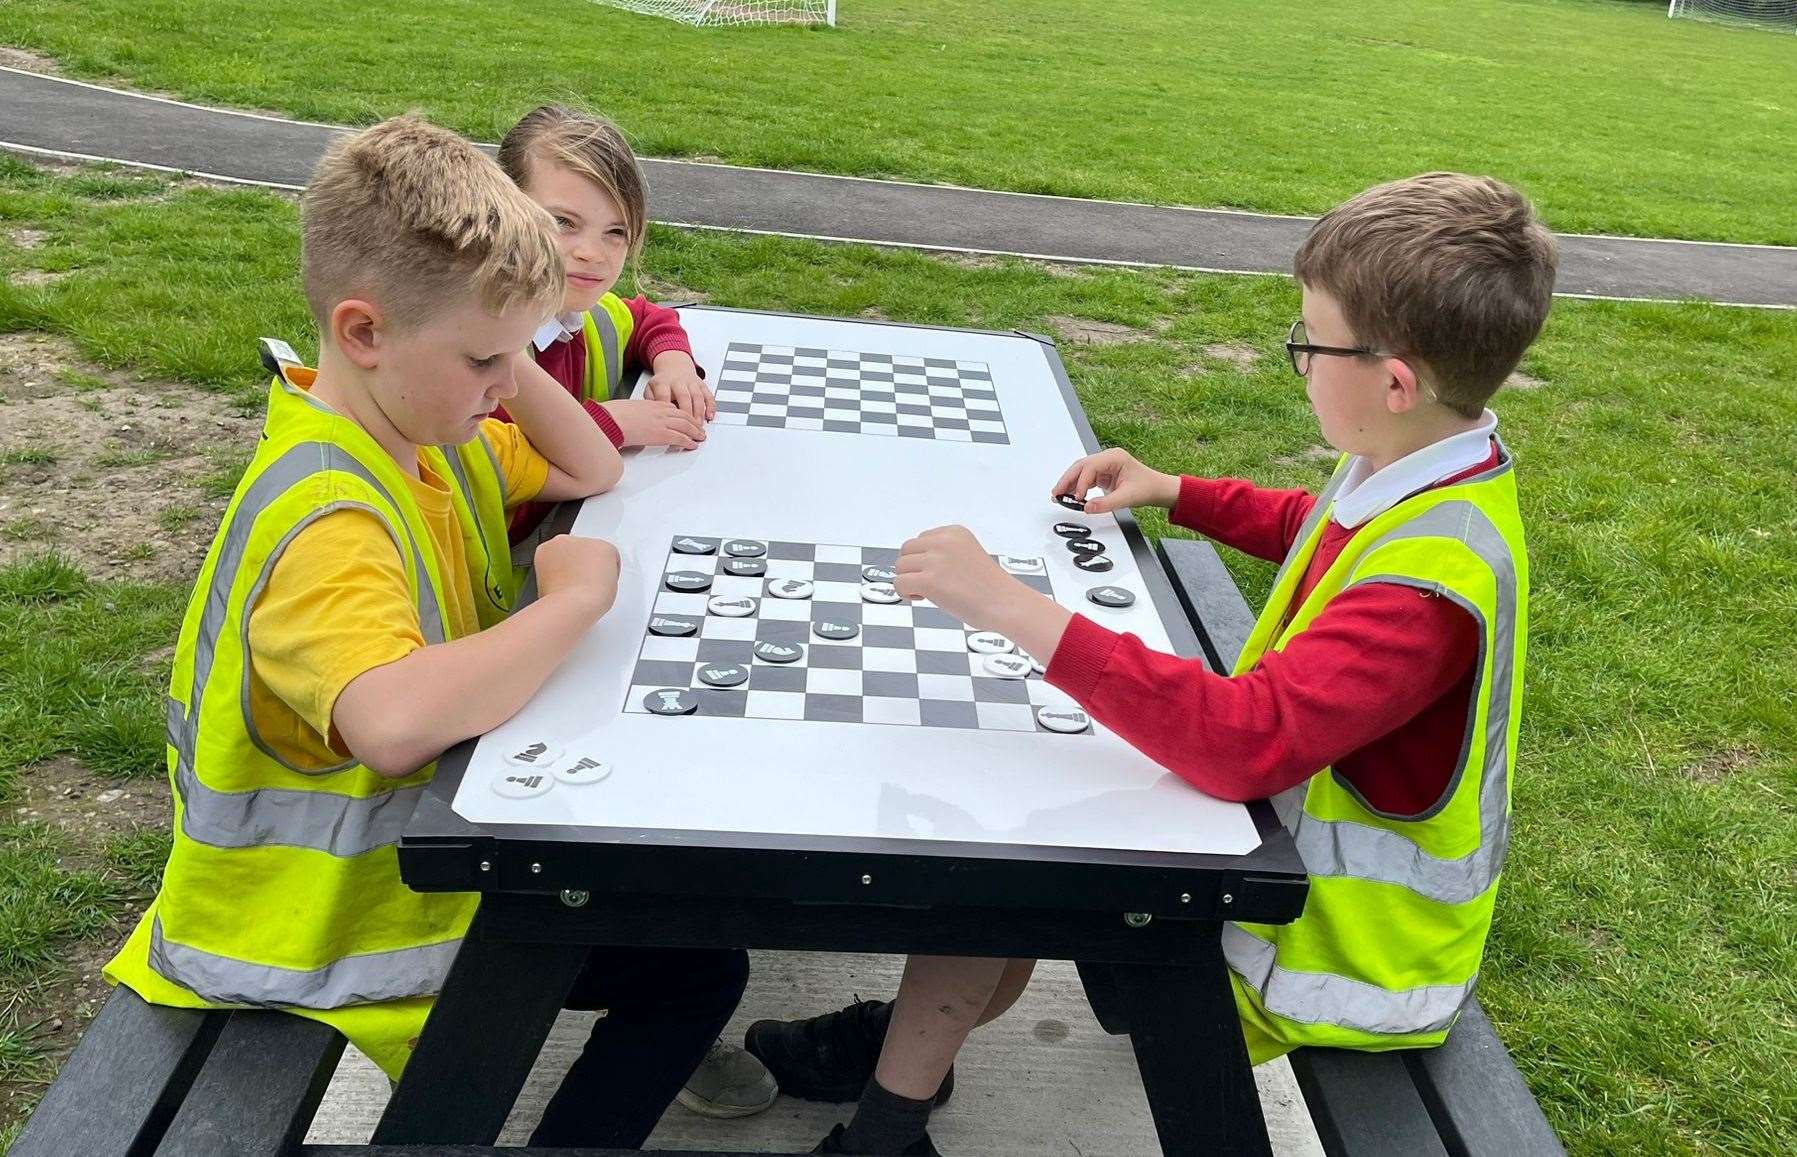 The new chess board. Picture: Offham Parish Council